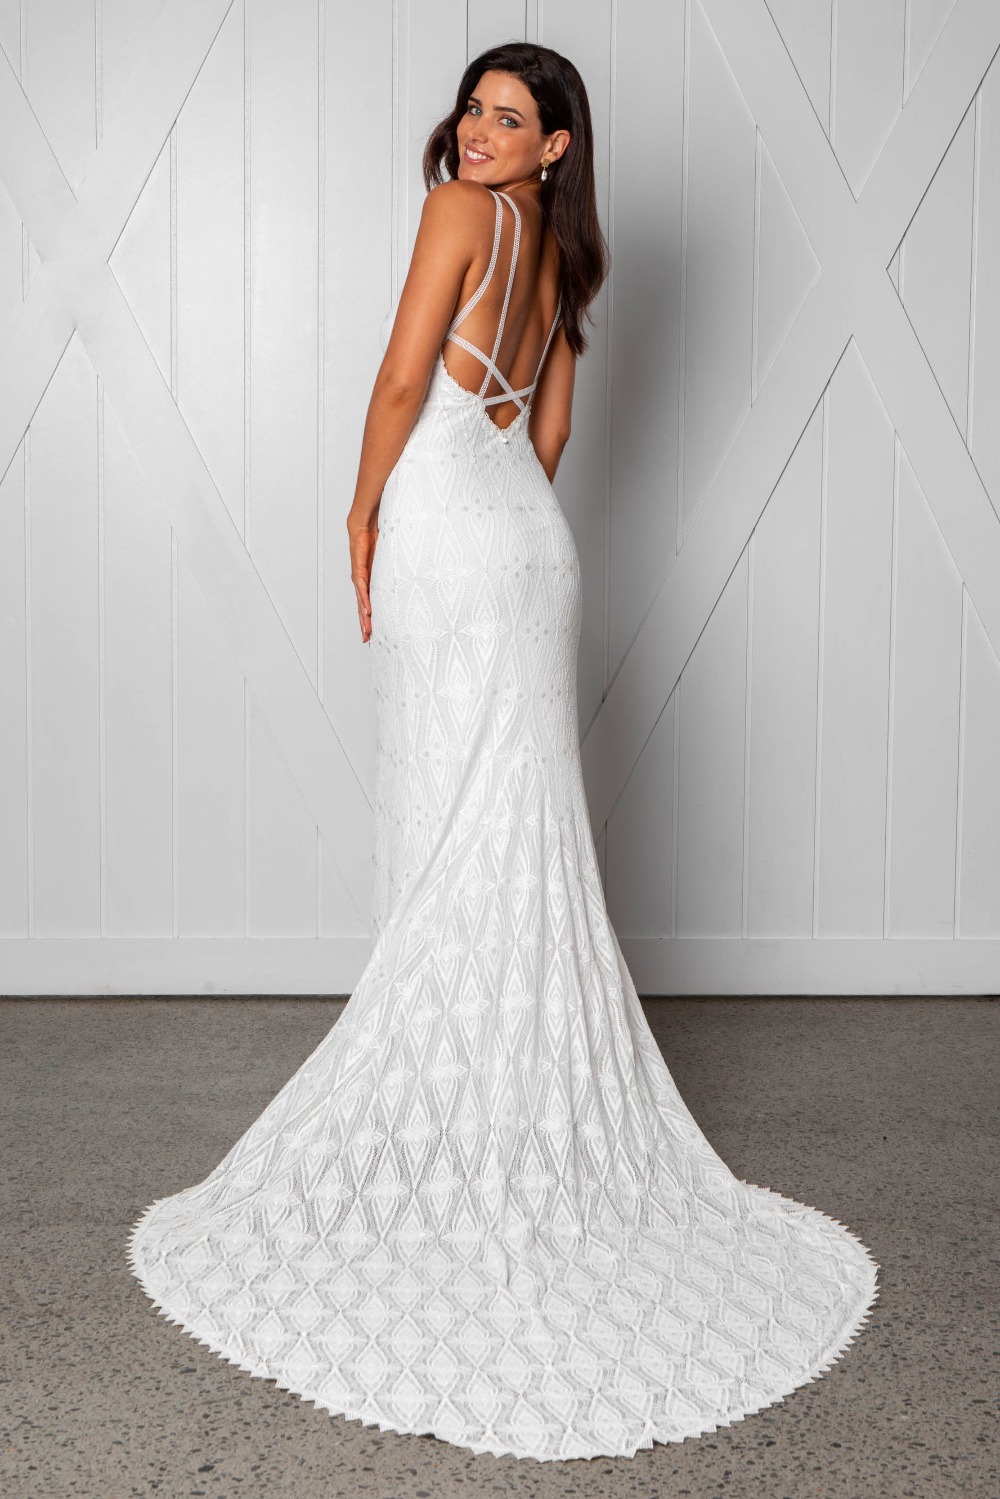 leon-wedding-dress-by-grace-loves-lace-1600-x-1067